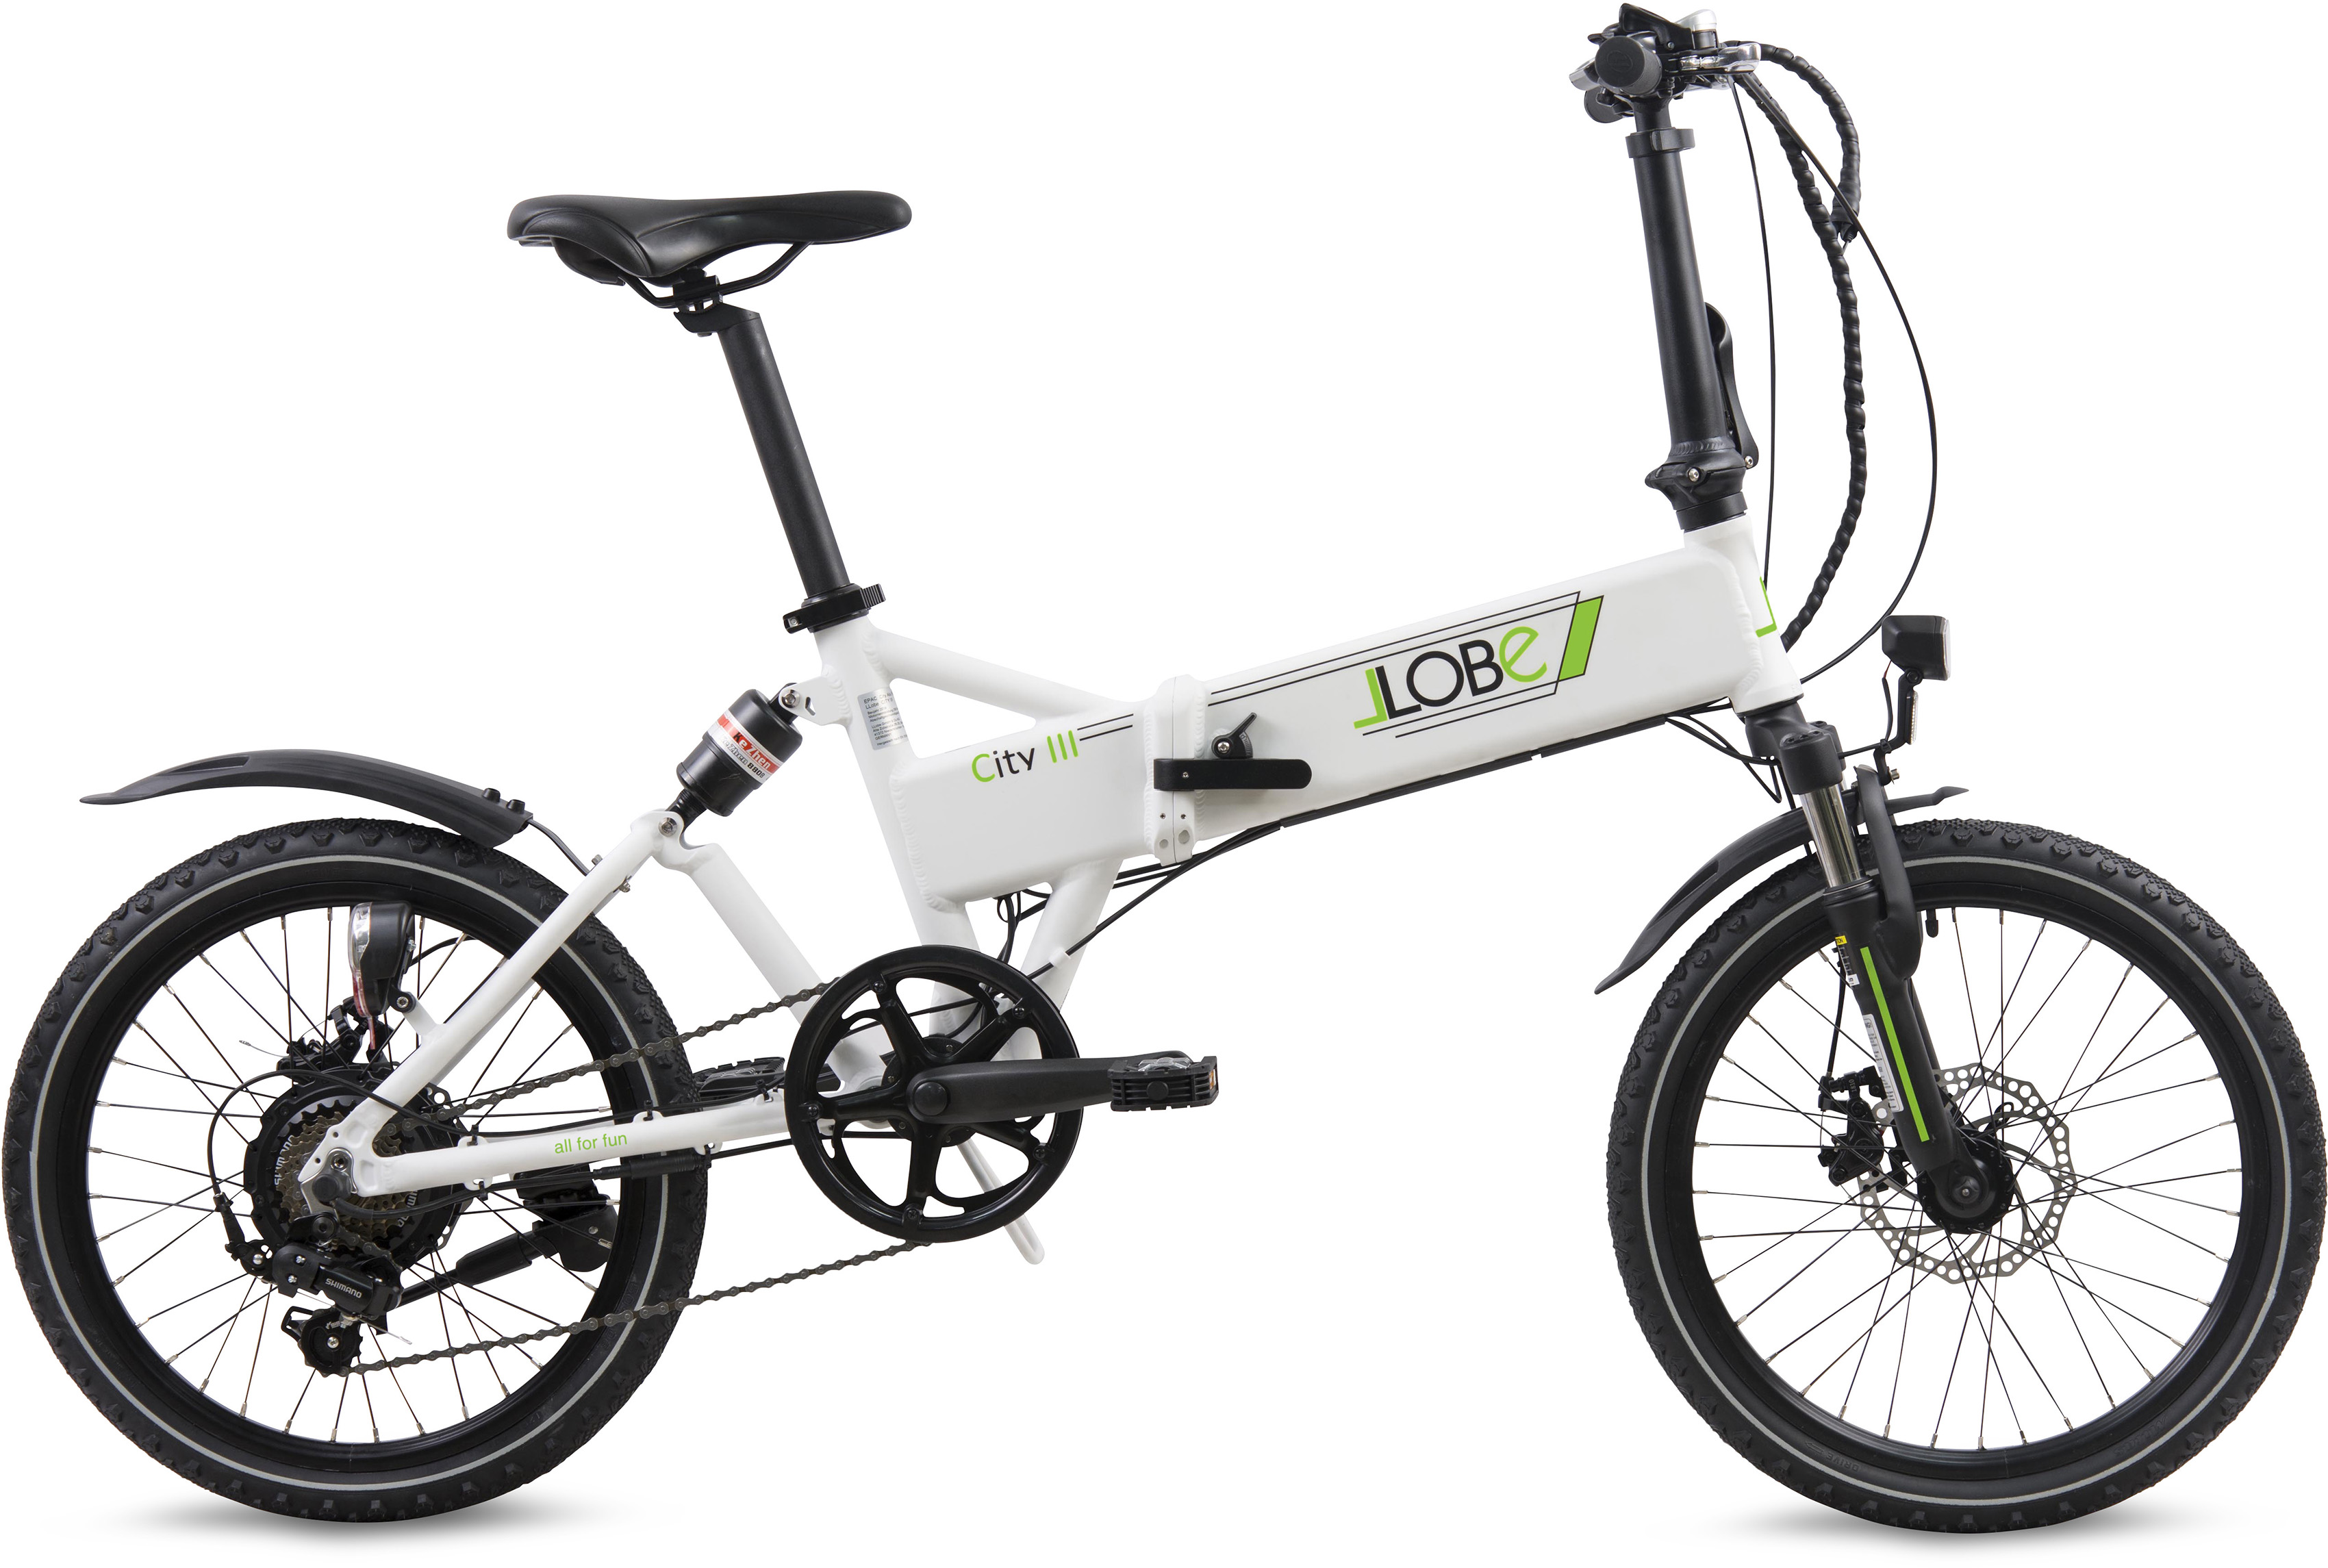 LLobe E-Bike "City III weiß", 7 Gang, Shimano, Heckmotor 250 W